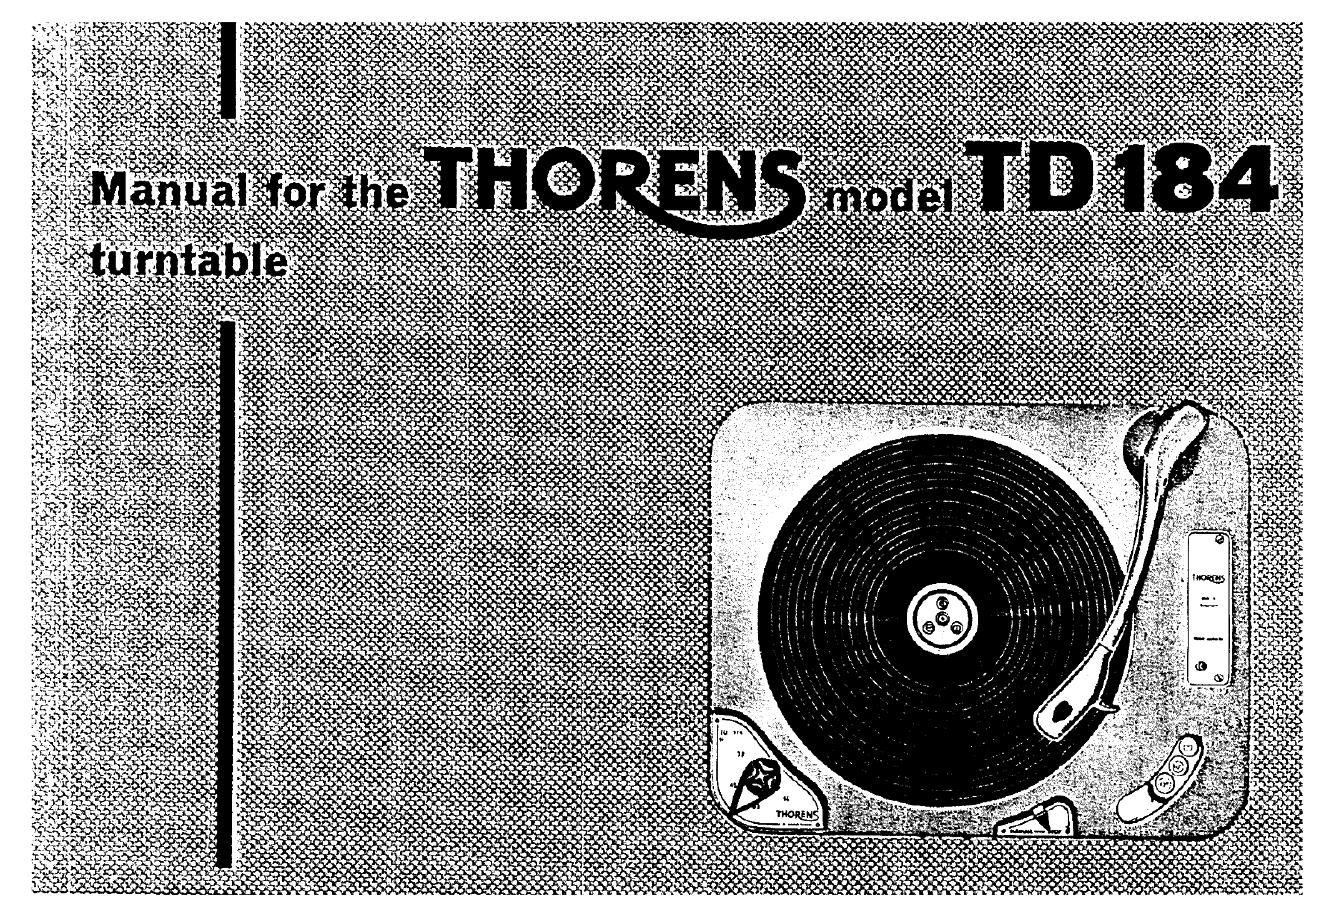 thorens td 184 owners manual